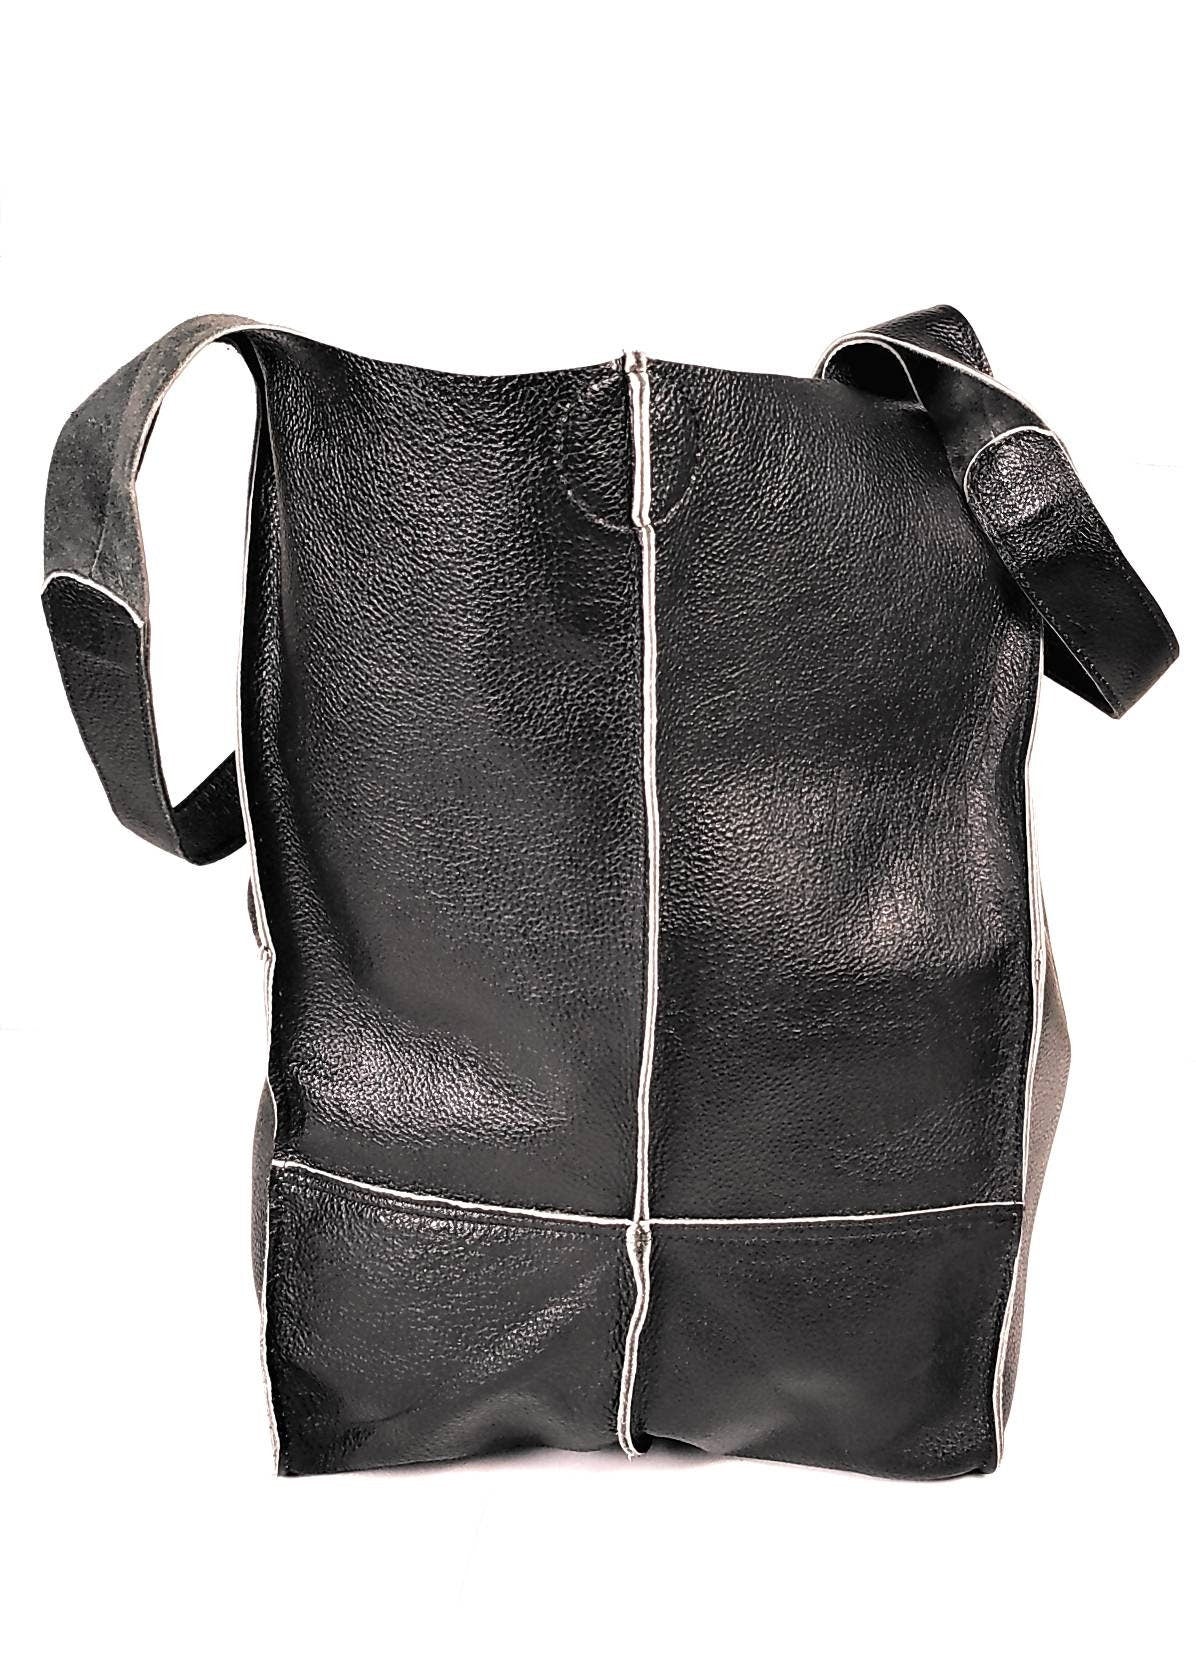 Black Oversize Leather Tote Shopper Bag Large Leather Weekender Bag Shoulder Bag Large Travel Bag Shopping Bag Oversized Tote Everyday Purse